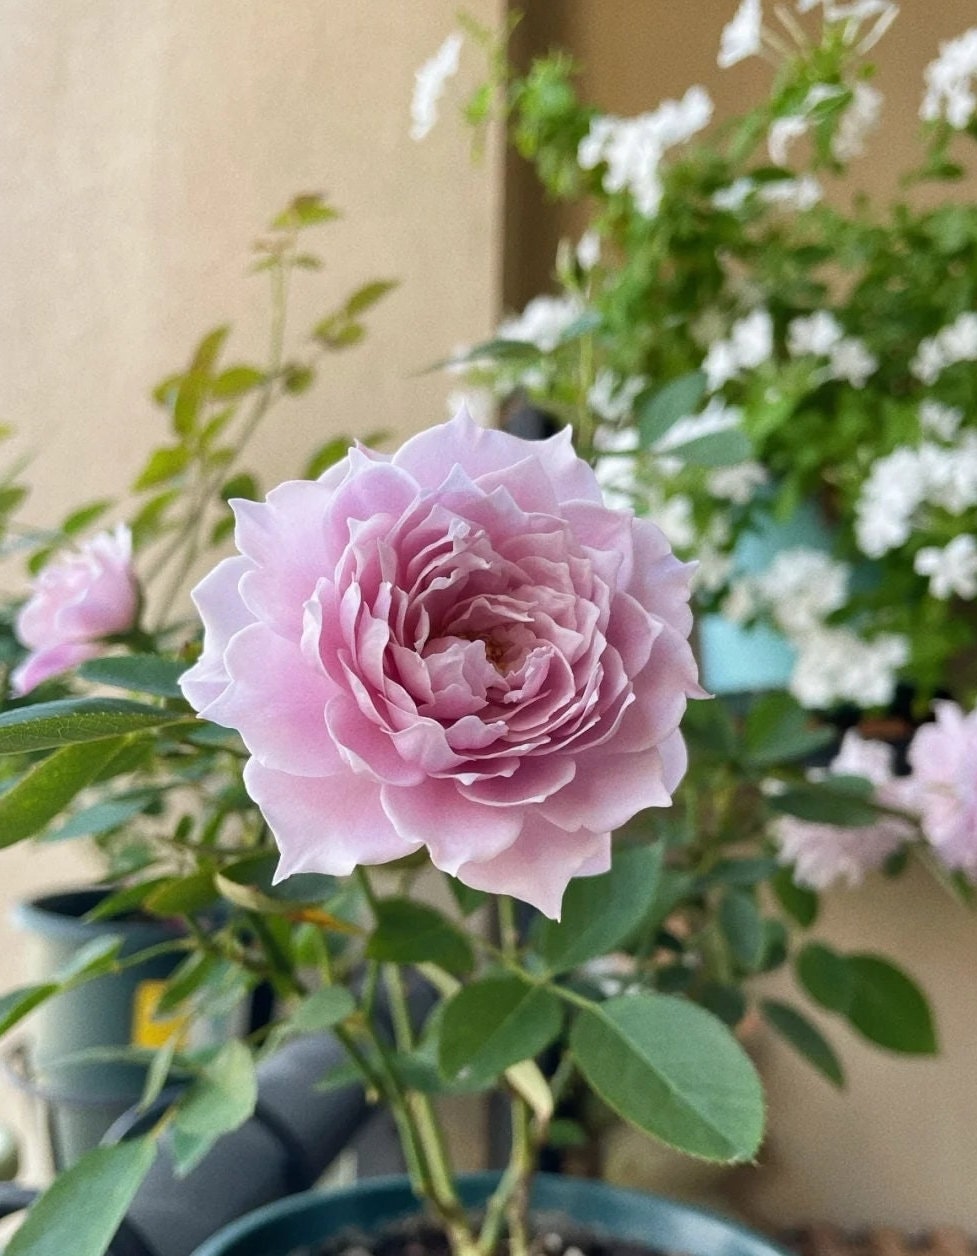 Chinese Rose 'Huan Zi' (幻紫) (1 Gal+ Live Plant) Shrub Rose